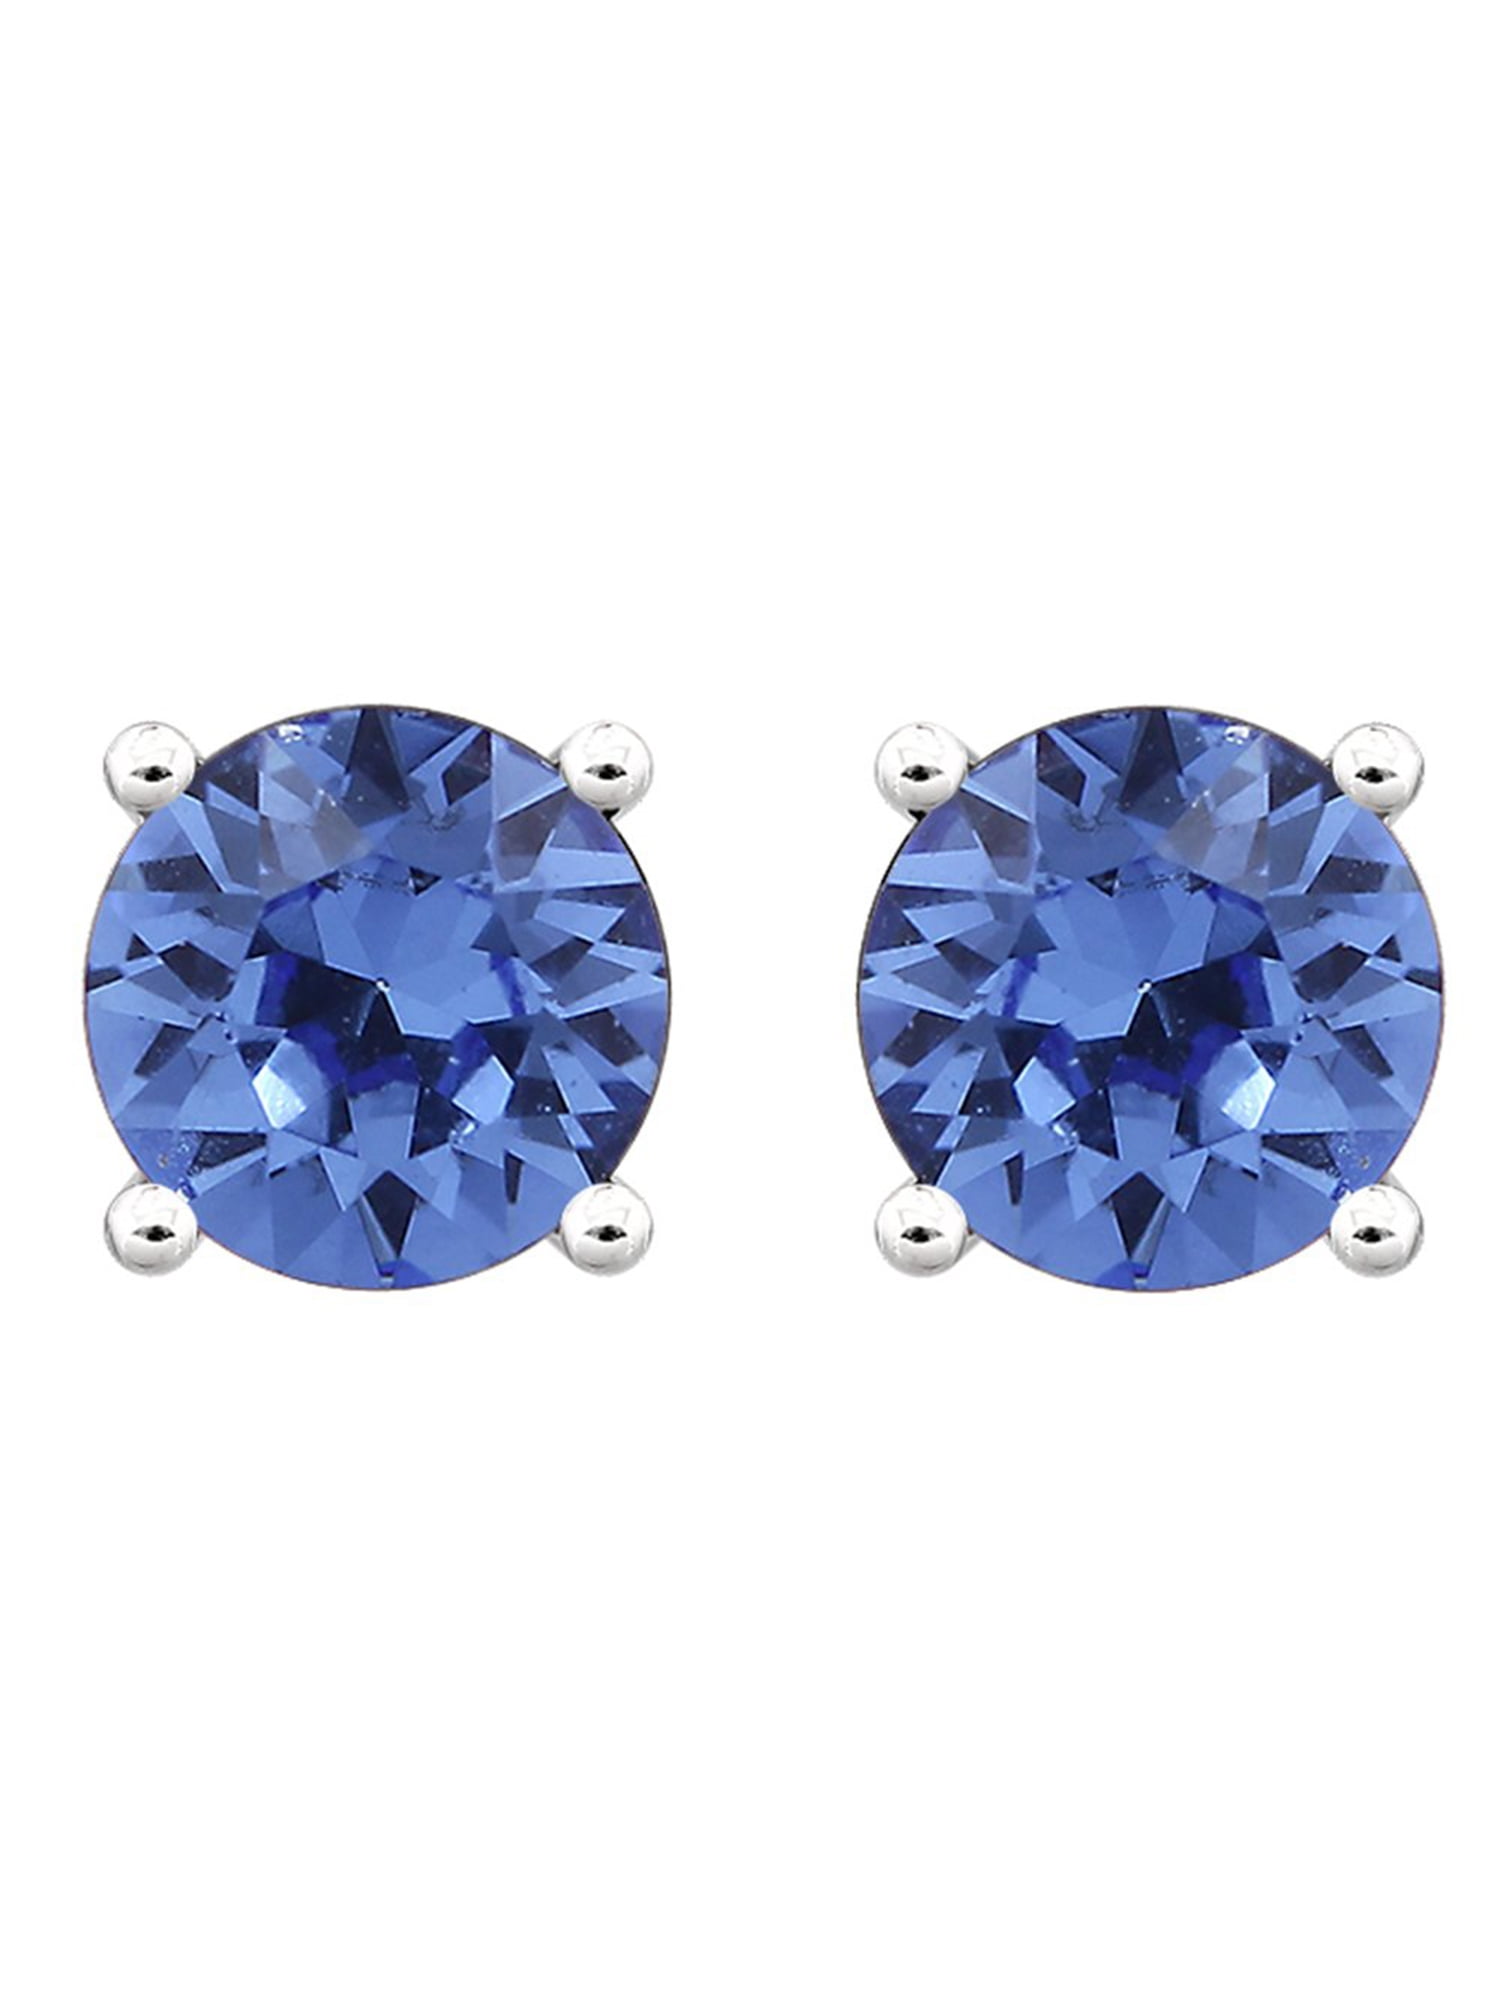 EverReena Blue Round Cubic Zirconia Earrings for Women Silver Color Womens Jewelry Earings 